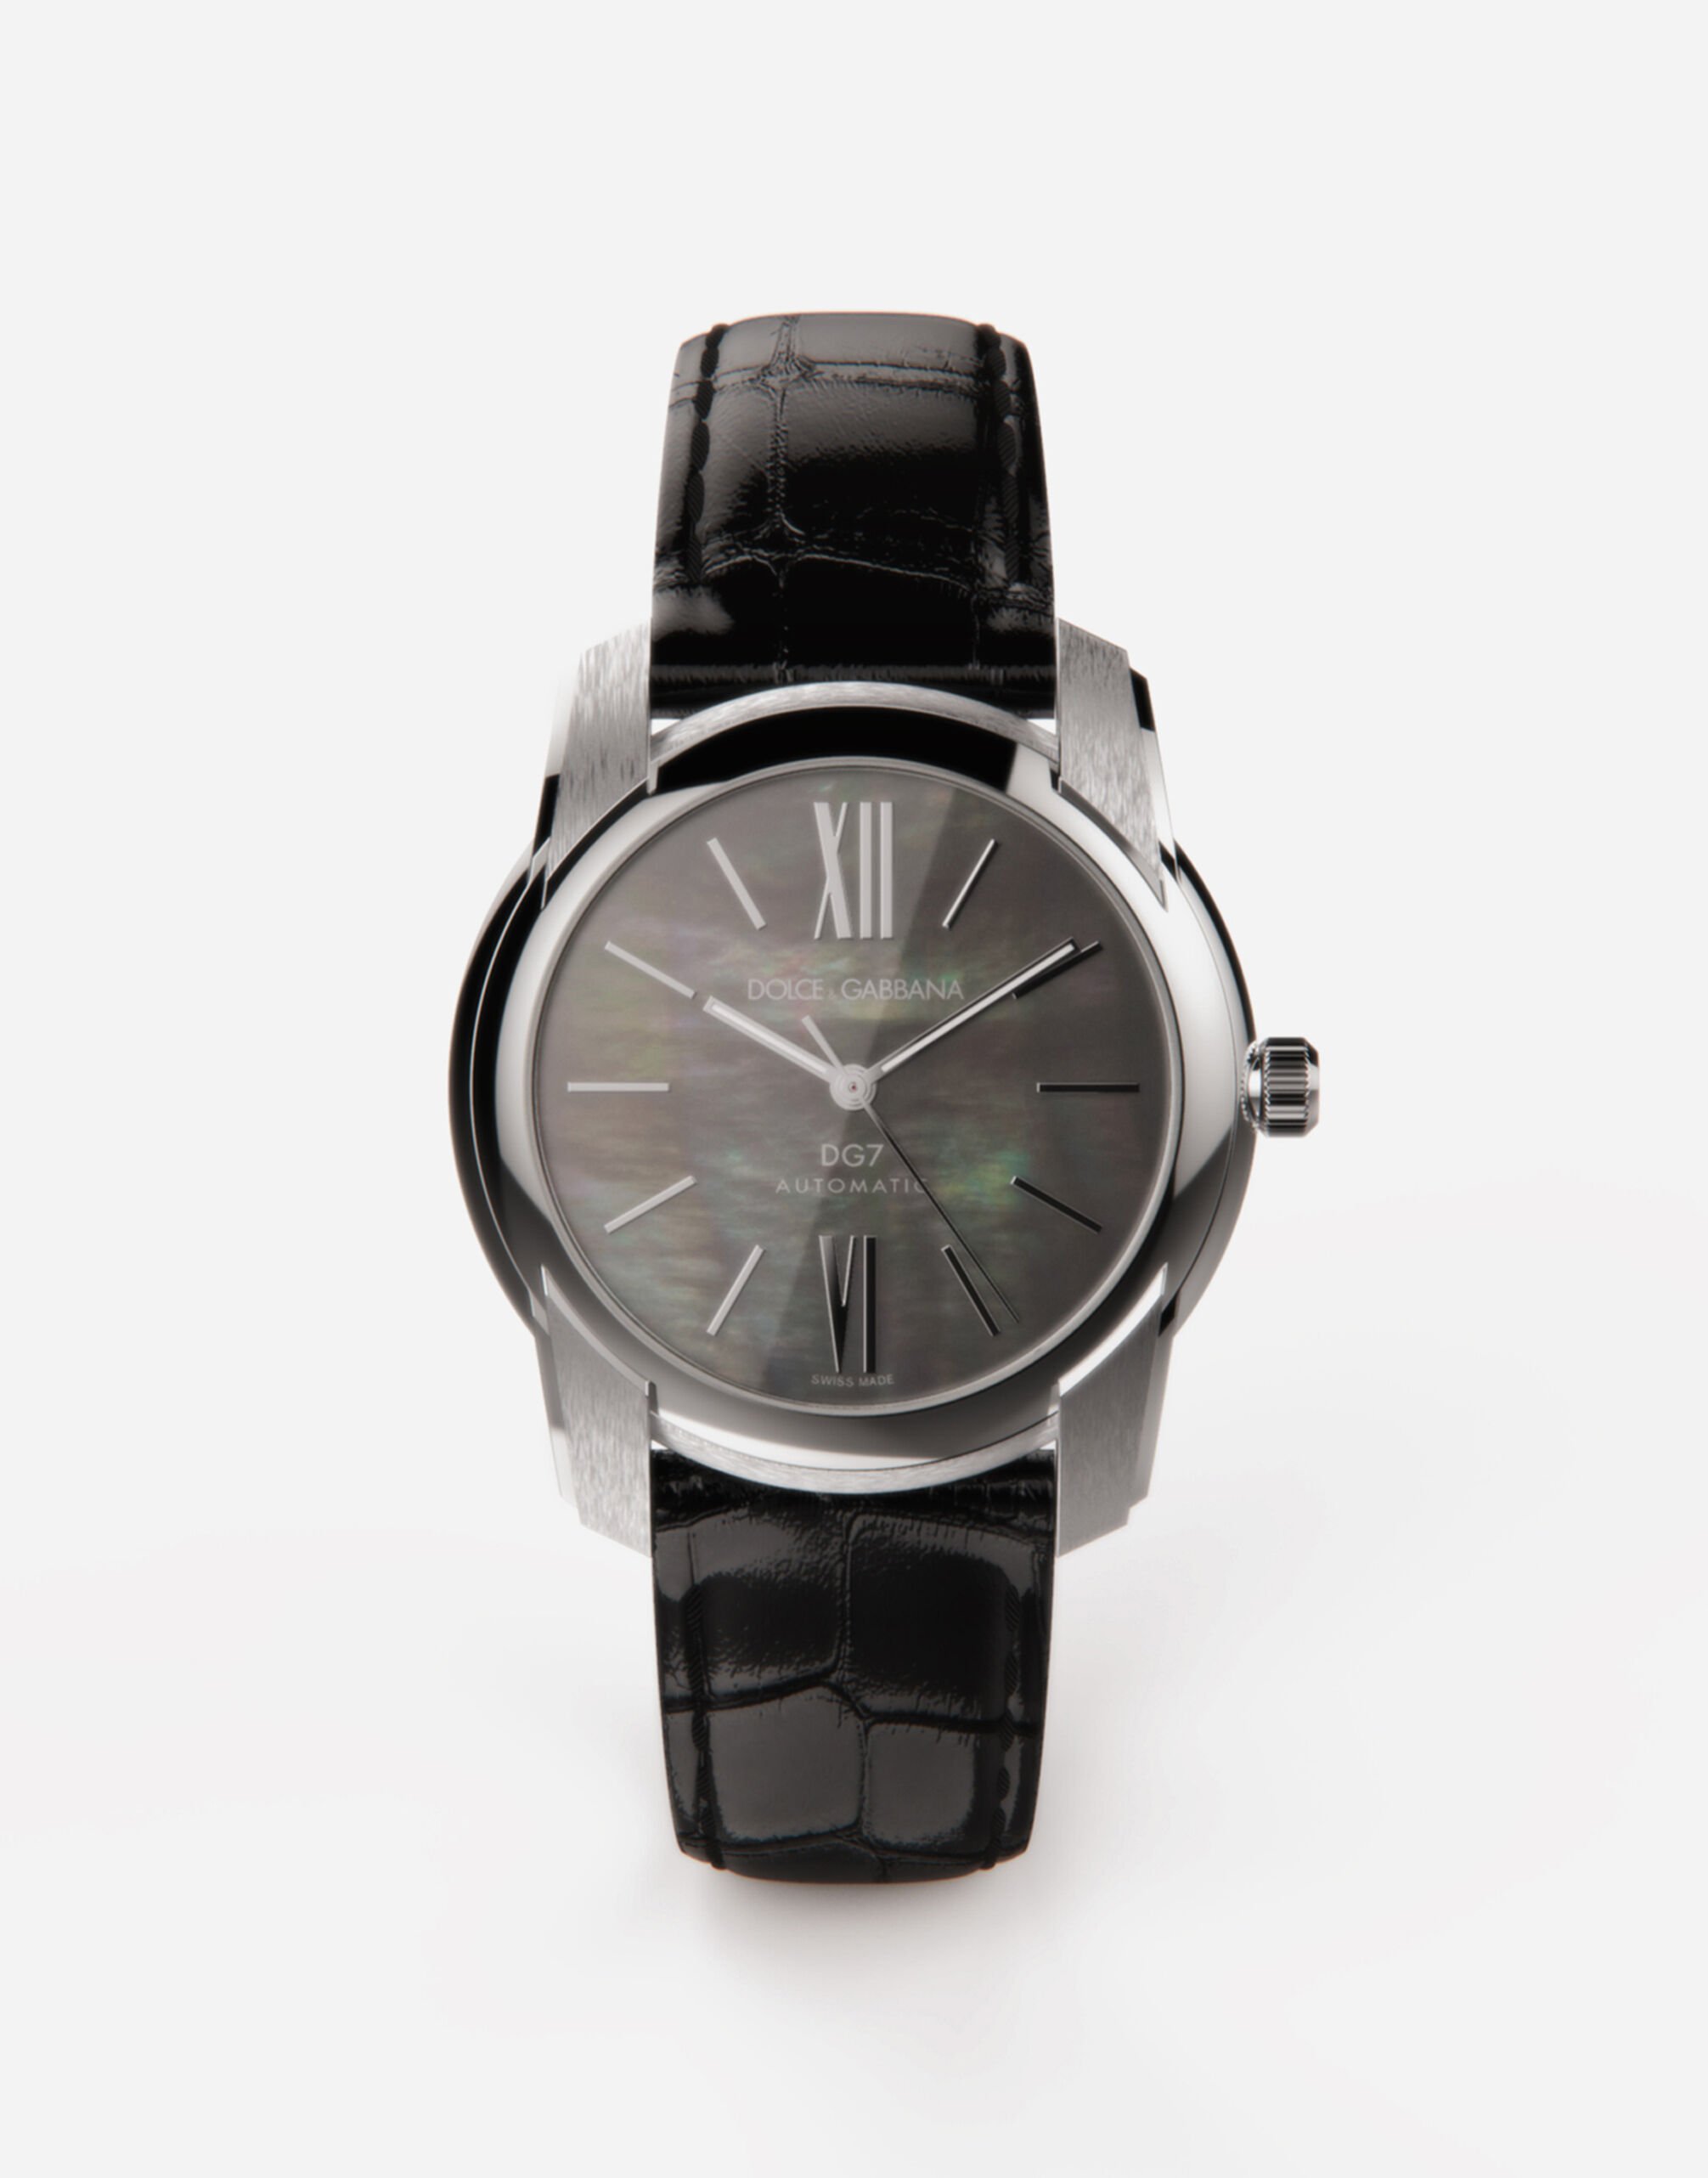 Dolce & Gabbana ساعة DG7 من الفولاذ مرصعة بعرق اللؤلؤ الأسود عنابي WWEEGGWW045